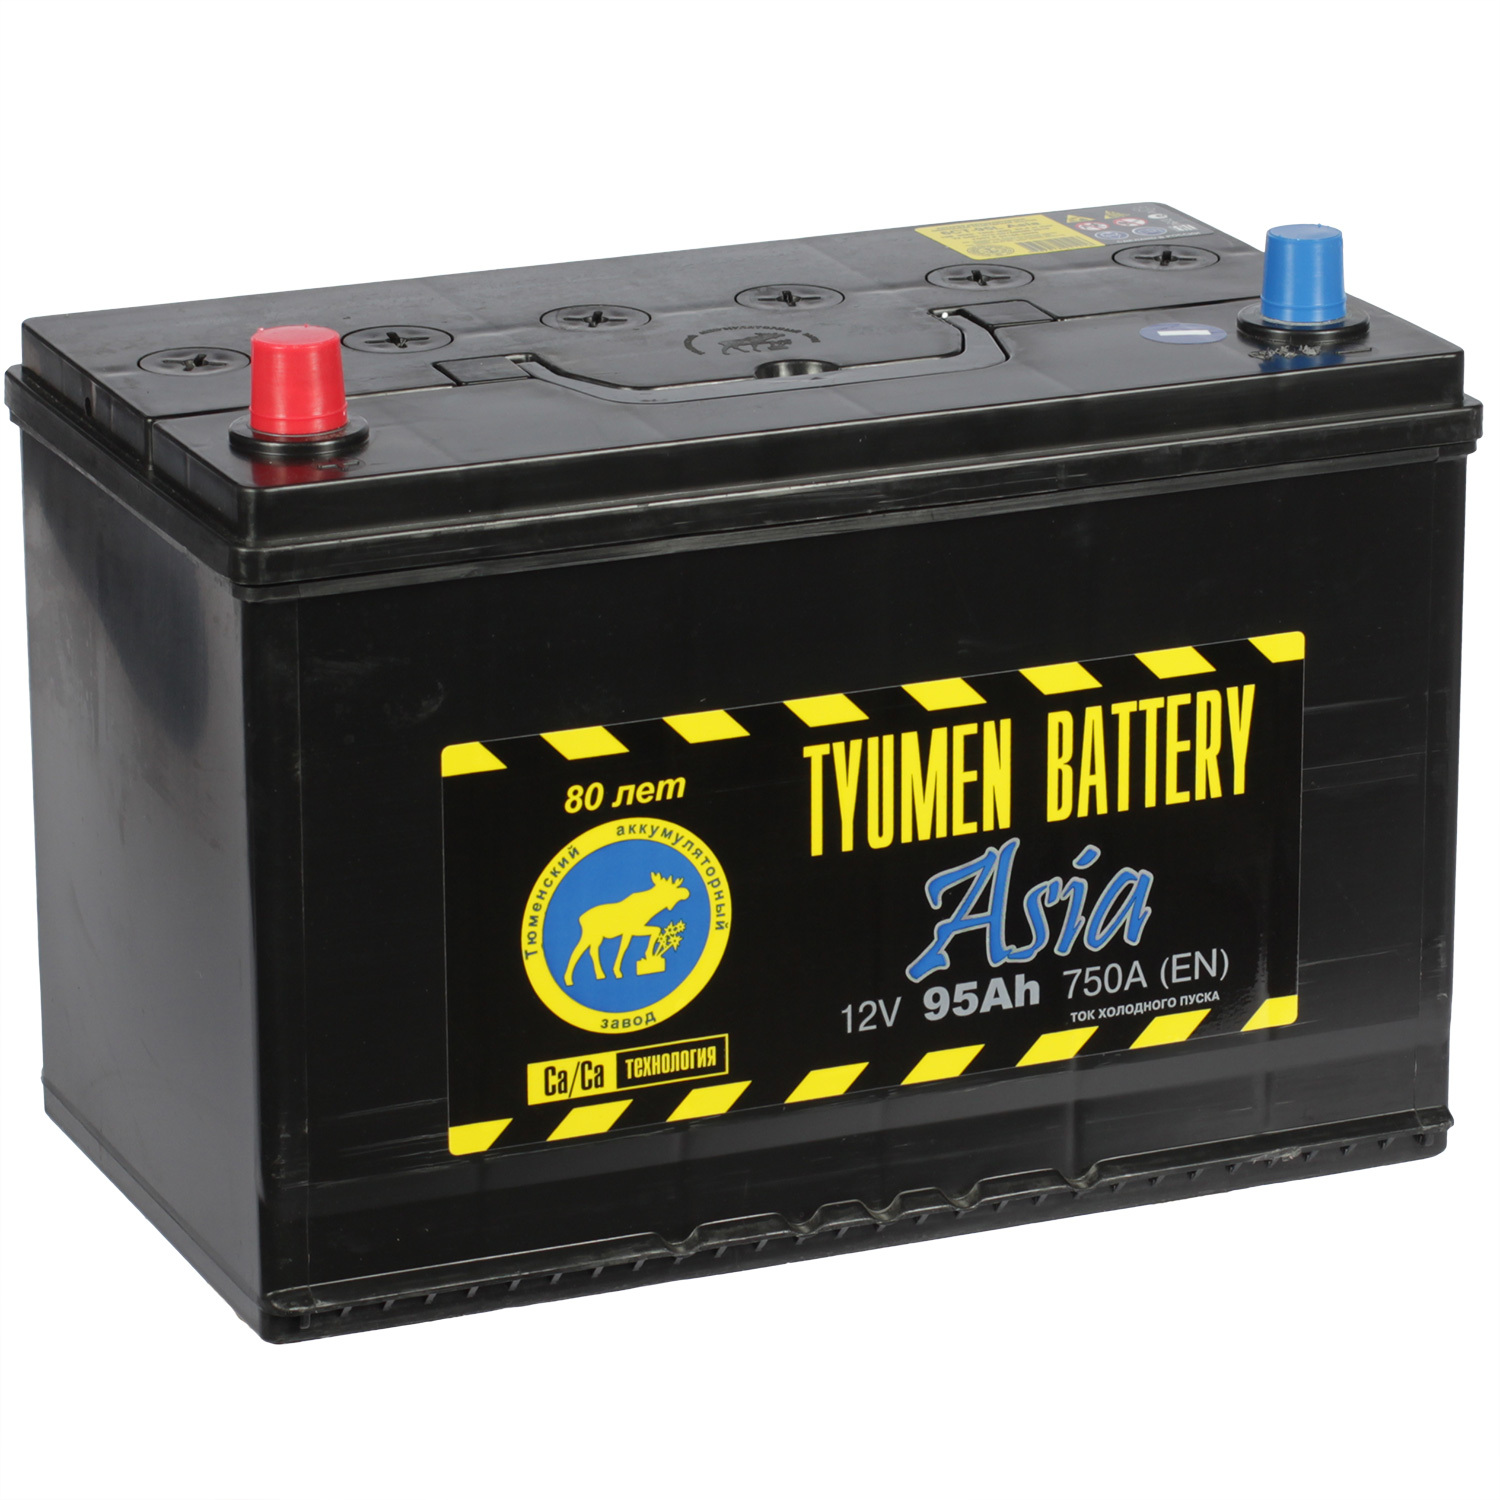 Tyumen Battery Автомобильный аккумулятор Tyumen Battery 95 Ач прямая полярность D31R eveready black battery c 2